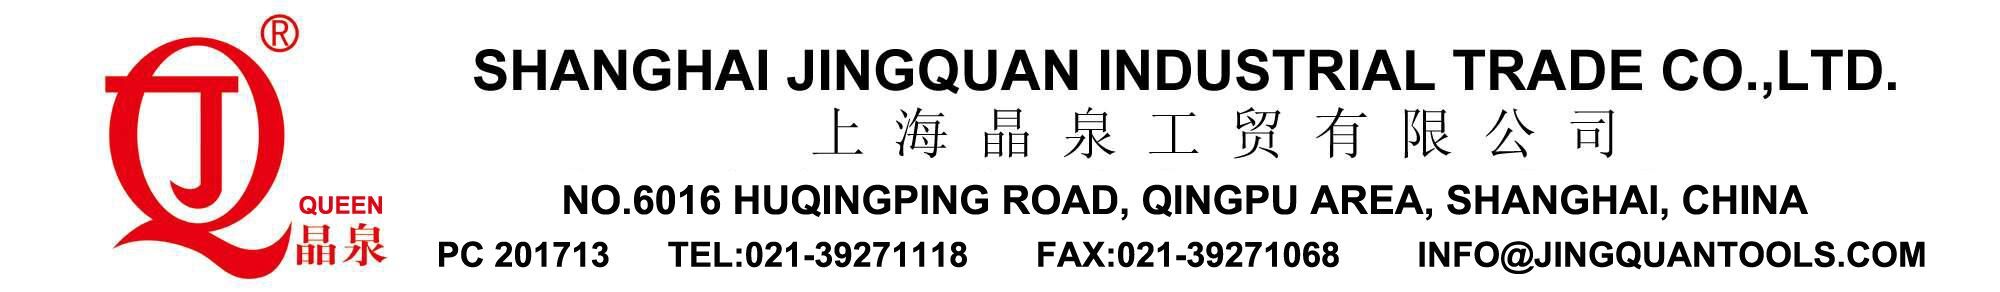 Shanghai Jingquan Industrial Trade Company